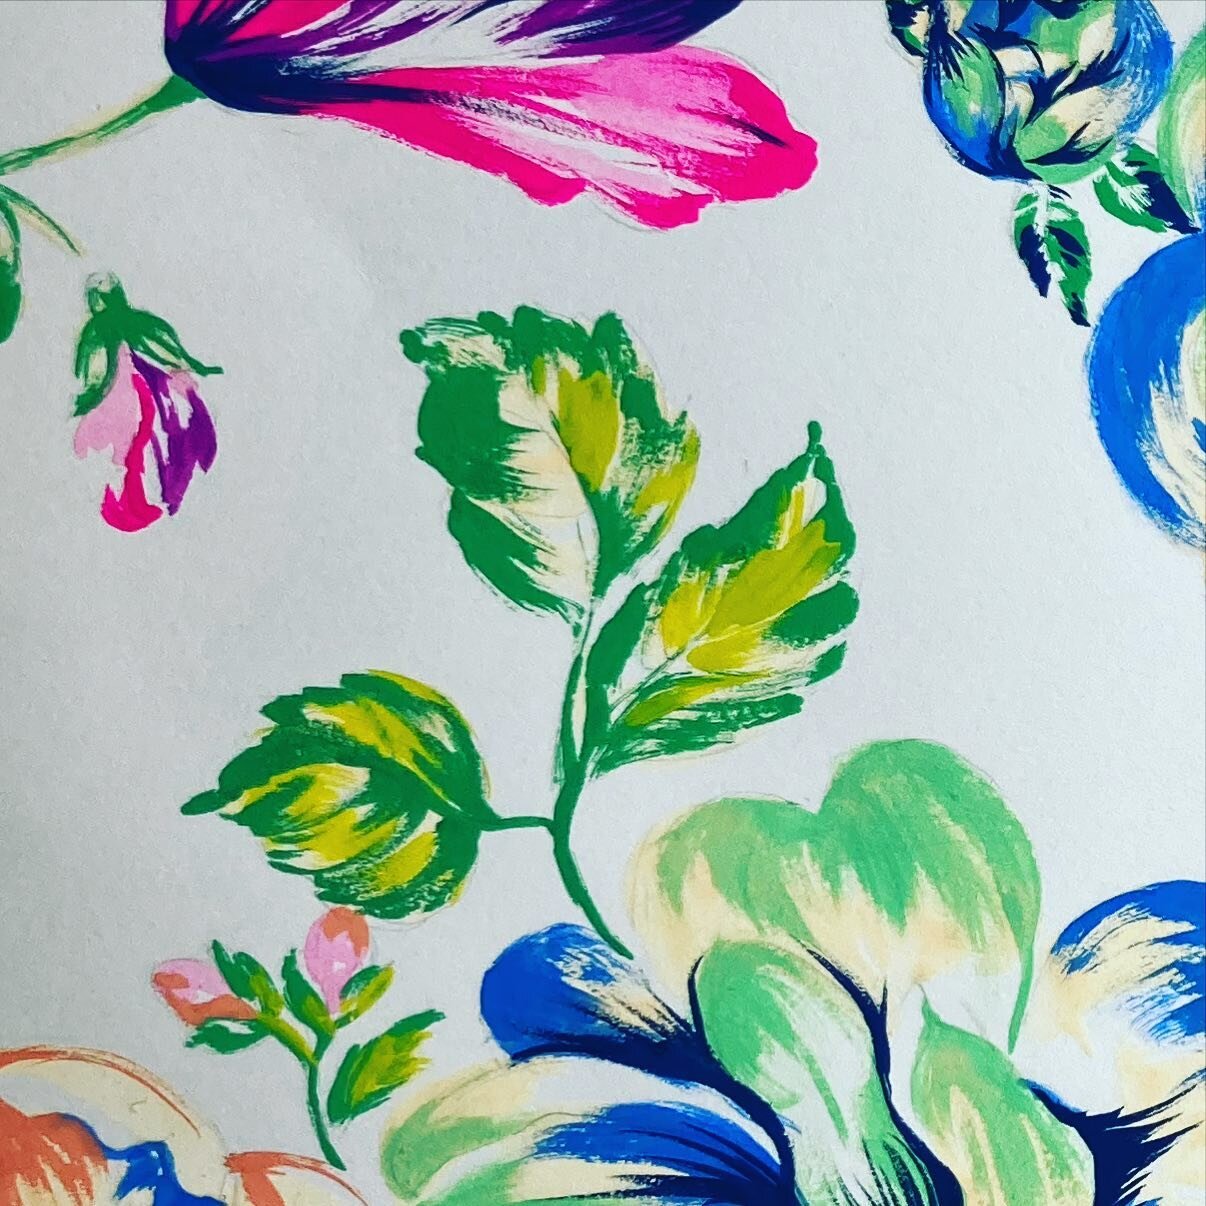 Gouache flower detail in shades of bright 😎

#textiledesign #textile #fashion #fashionprint #printandpattern #pattern #surfacepatterndesign #printstudio #gouache #floral #floralprint #floraltextiles